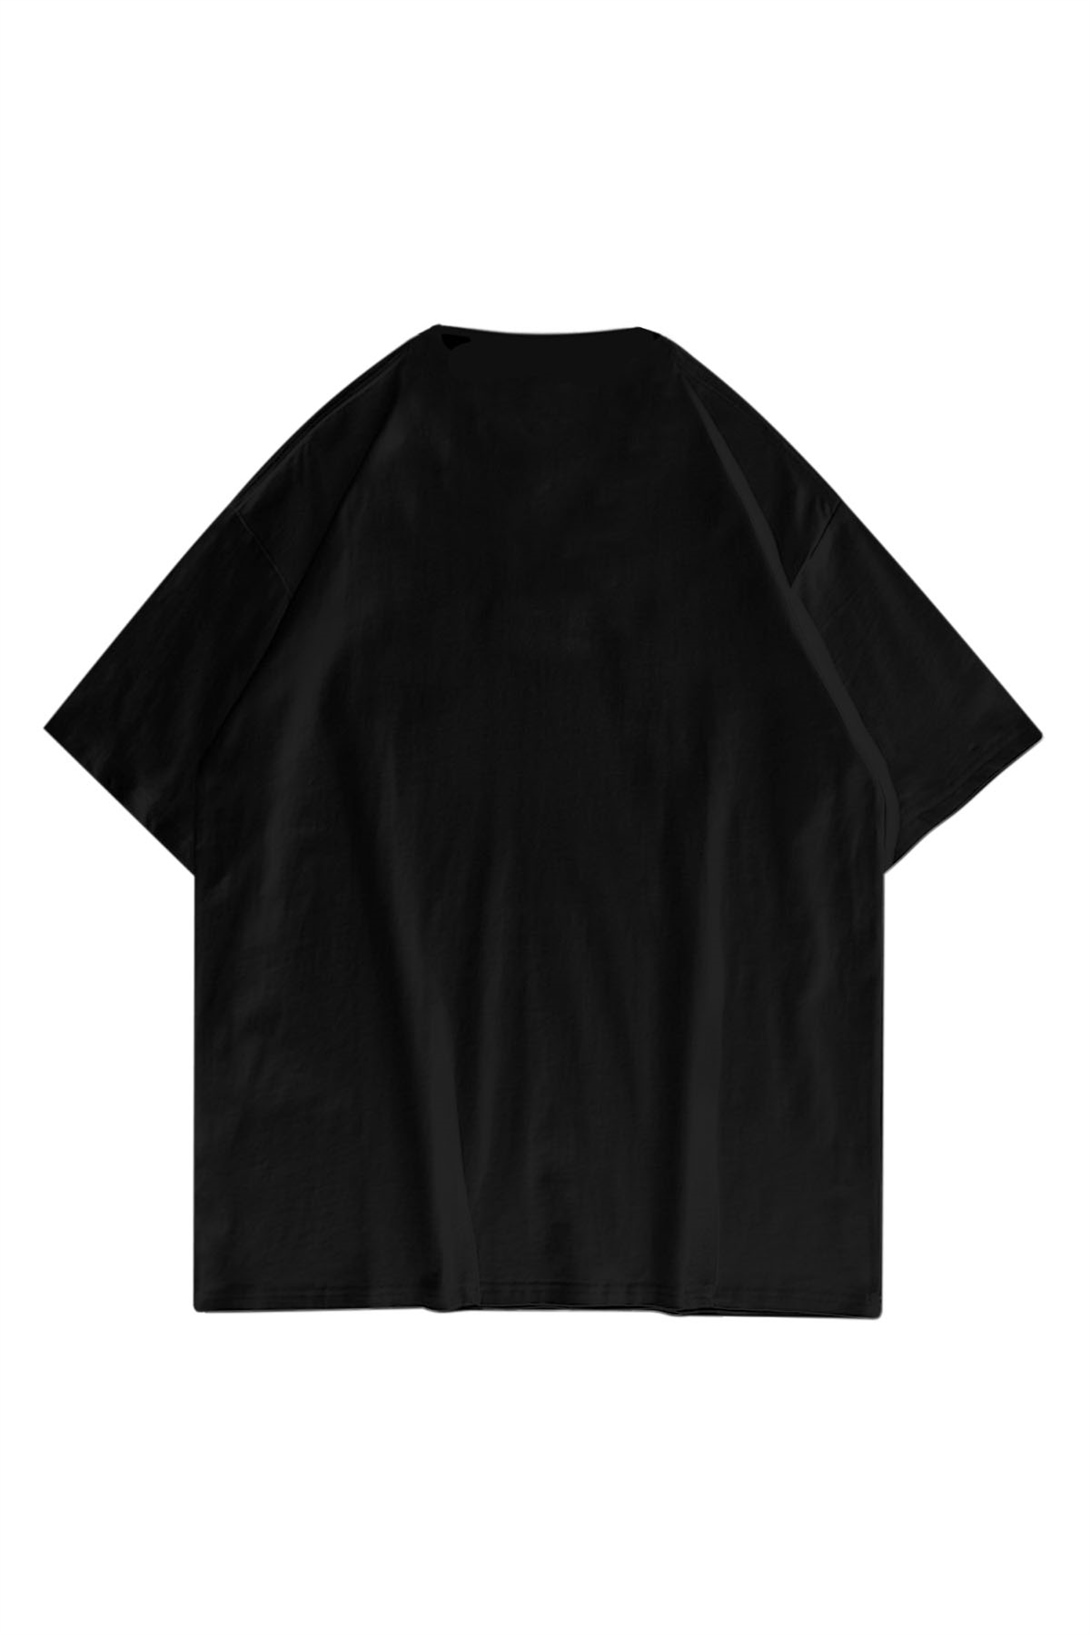 Trendiz Unisex Point of View Siyah Tshirt